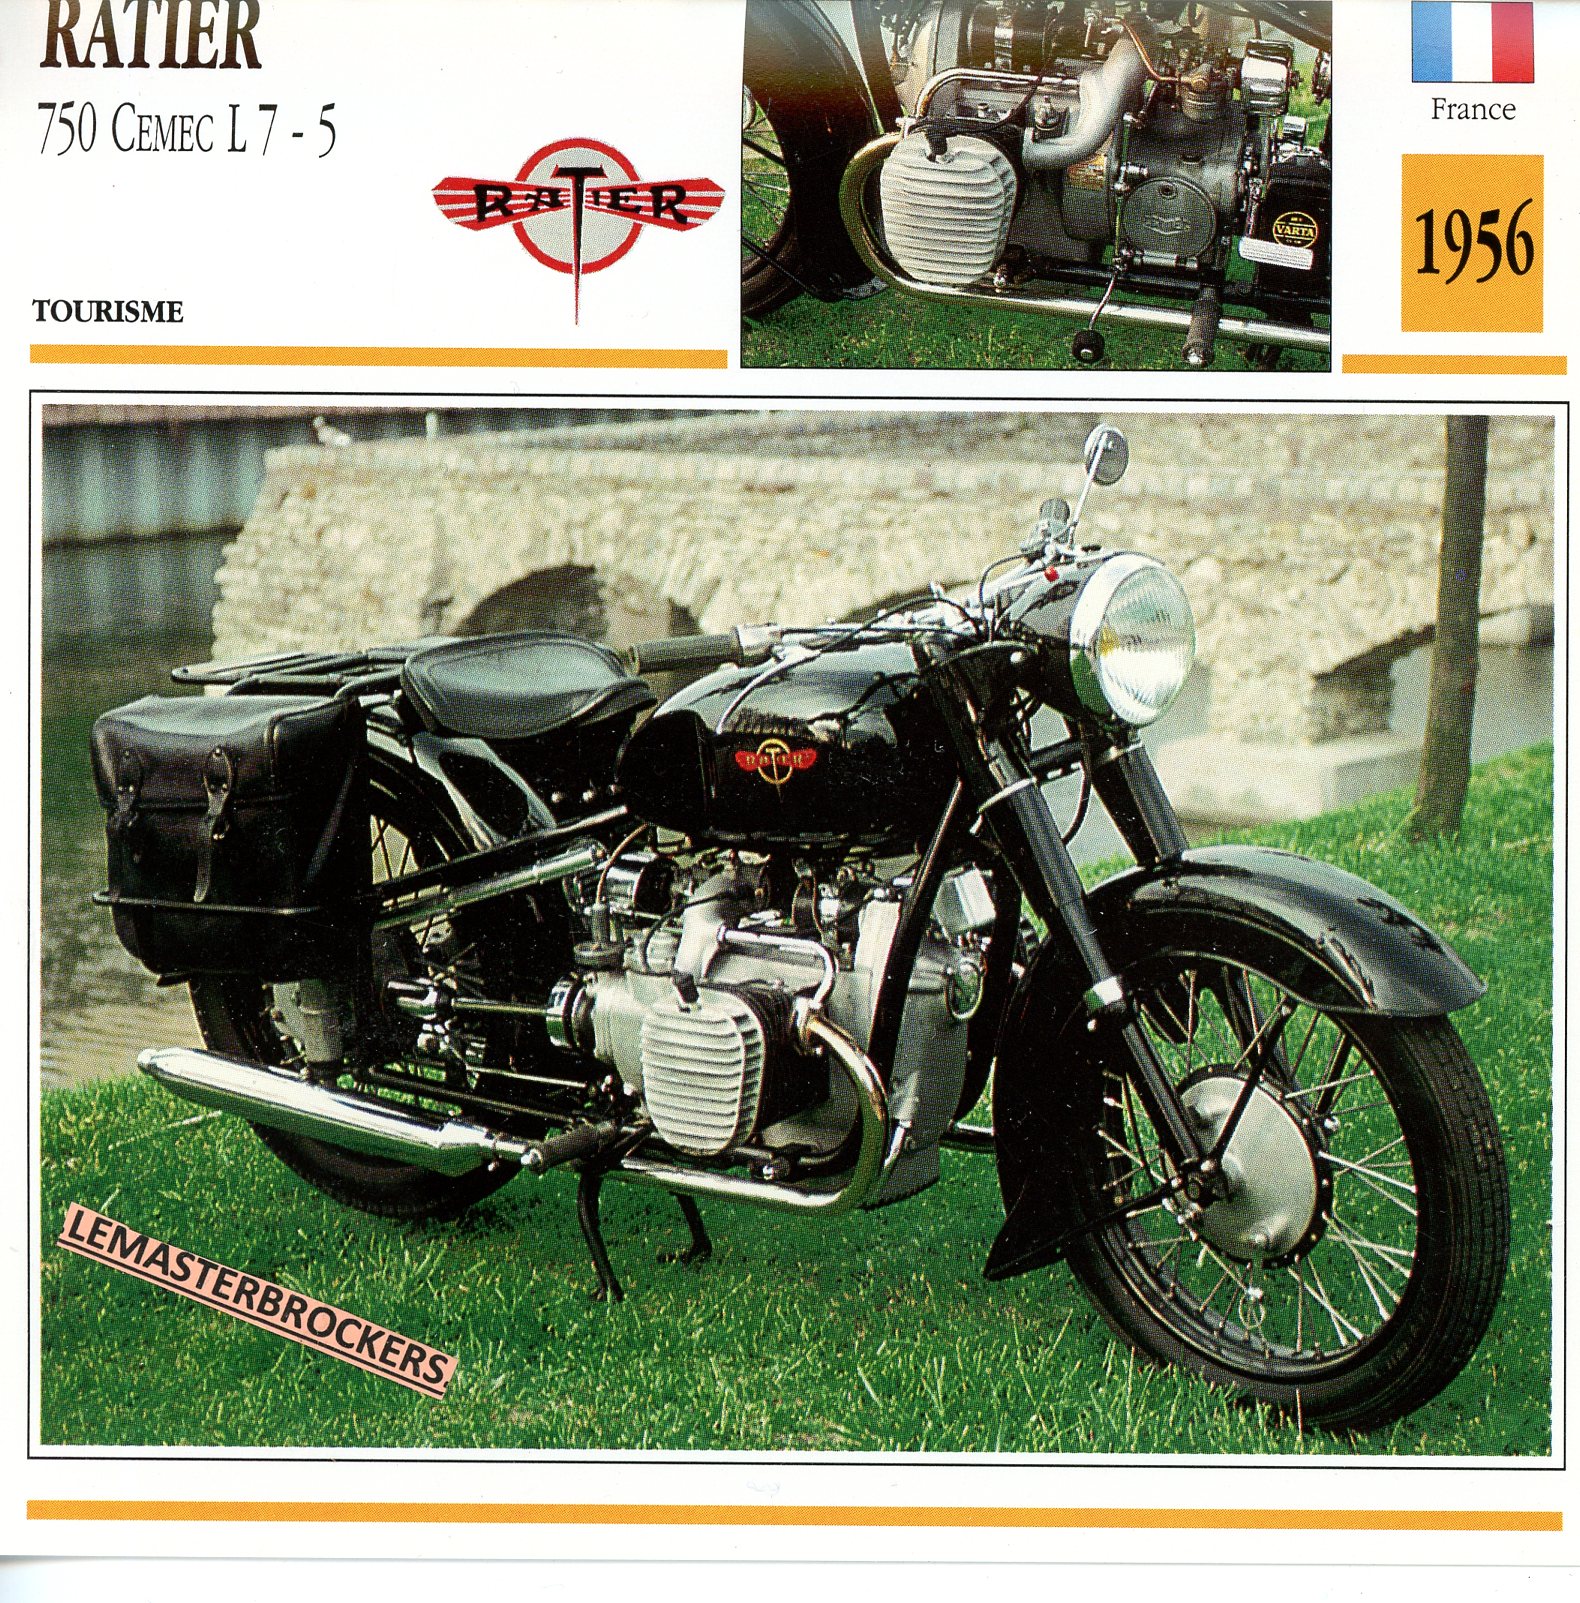 RATIER-750-CEMEC-1956-FICHE-MOTO-ATLAS-lemasterbrockers-CARD-MOTORCYCLE